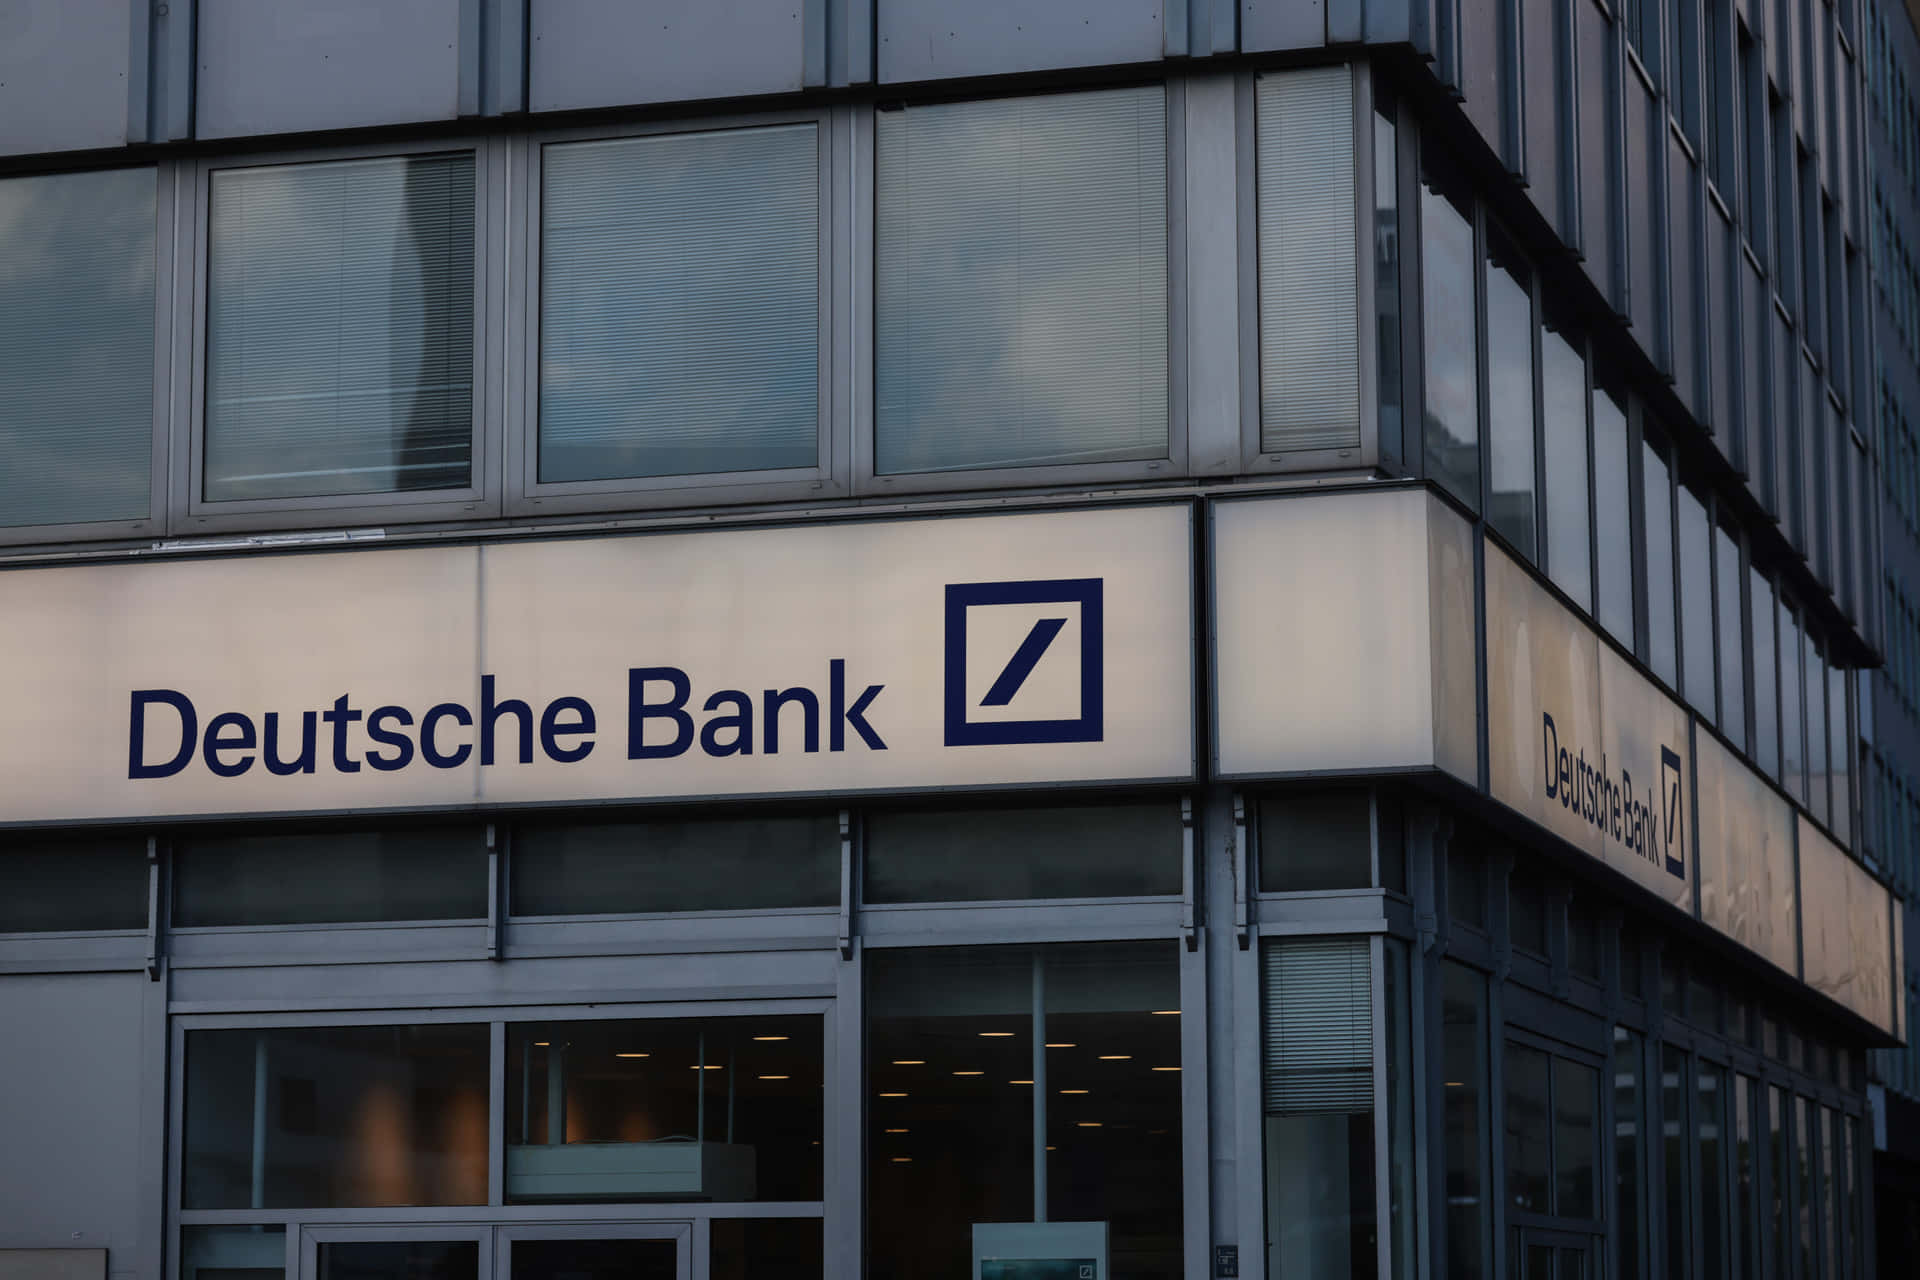 Germany banks. Дойче банк. Немецкий банк Deutsche Bank. Американский банк.